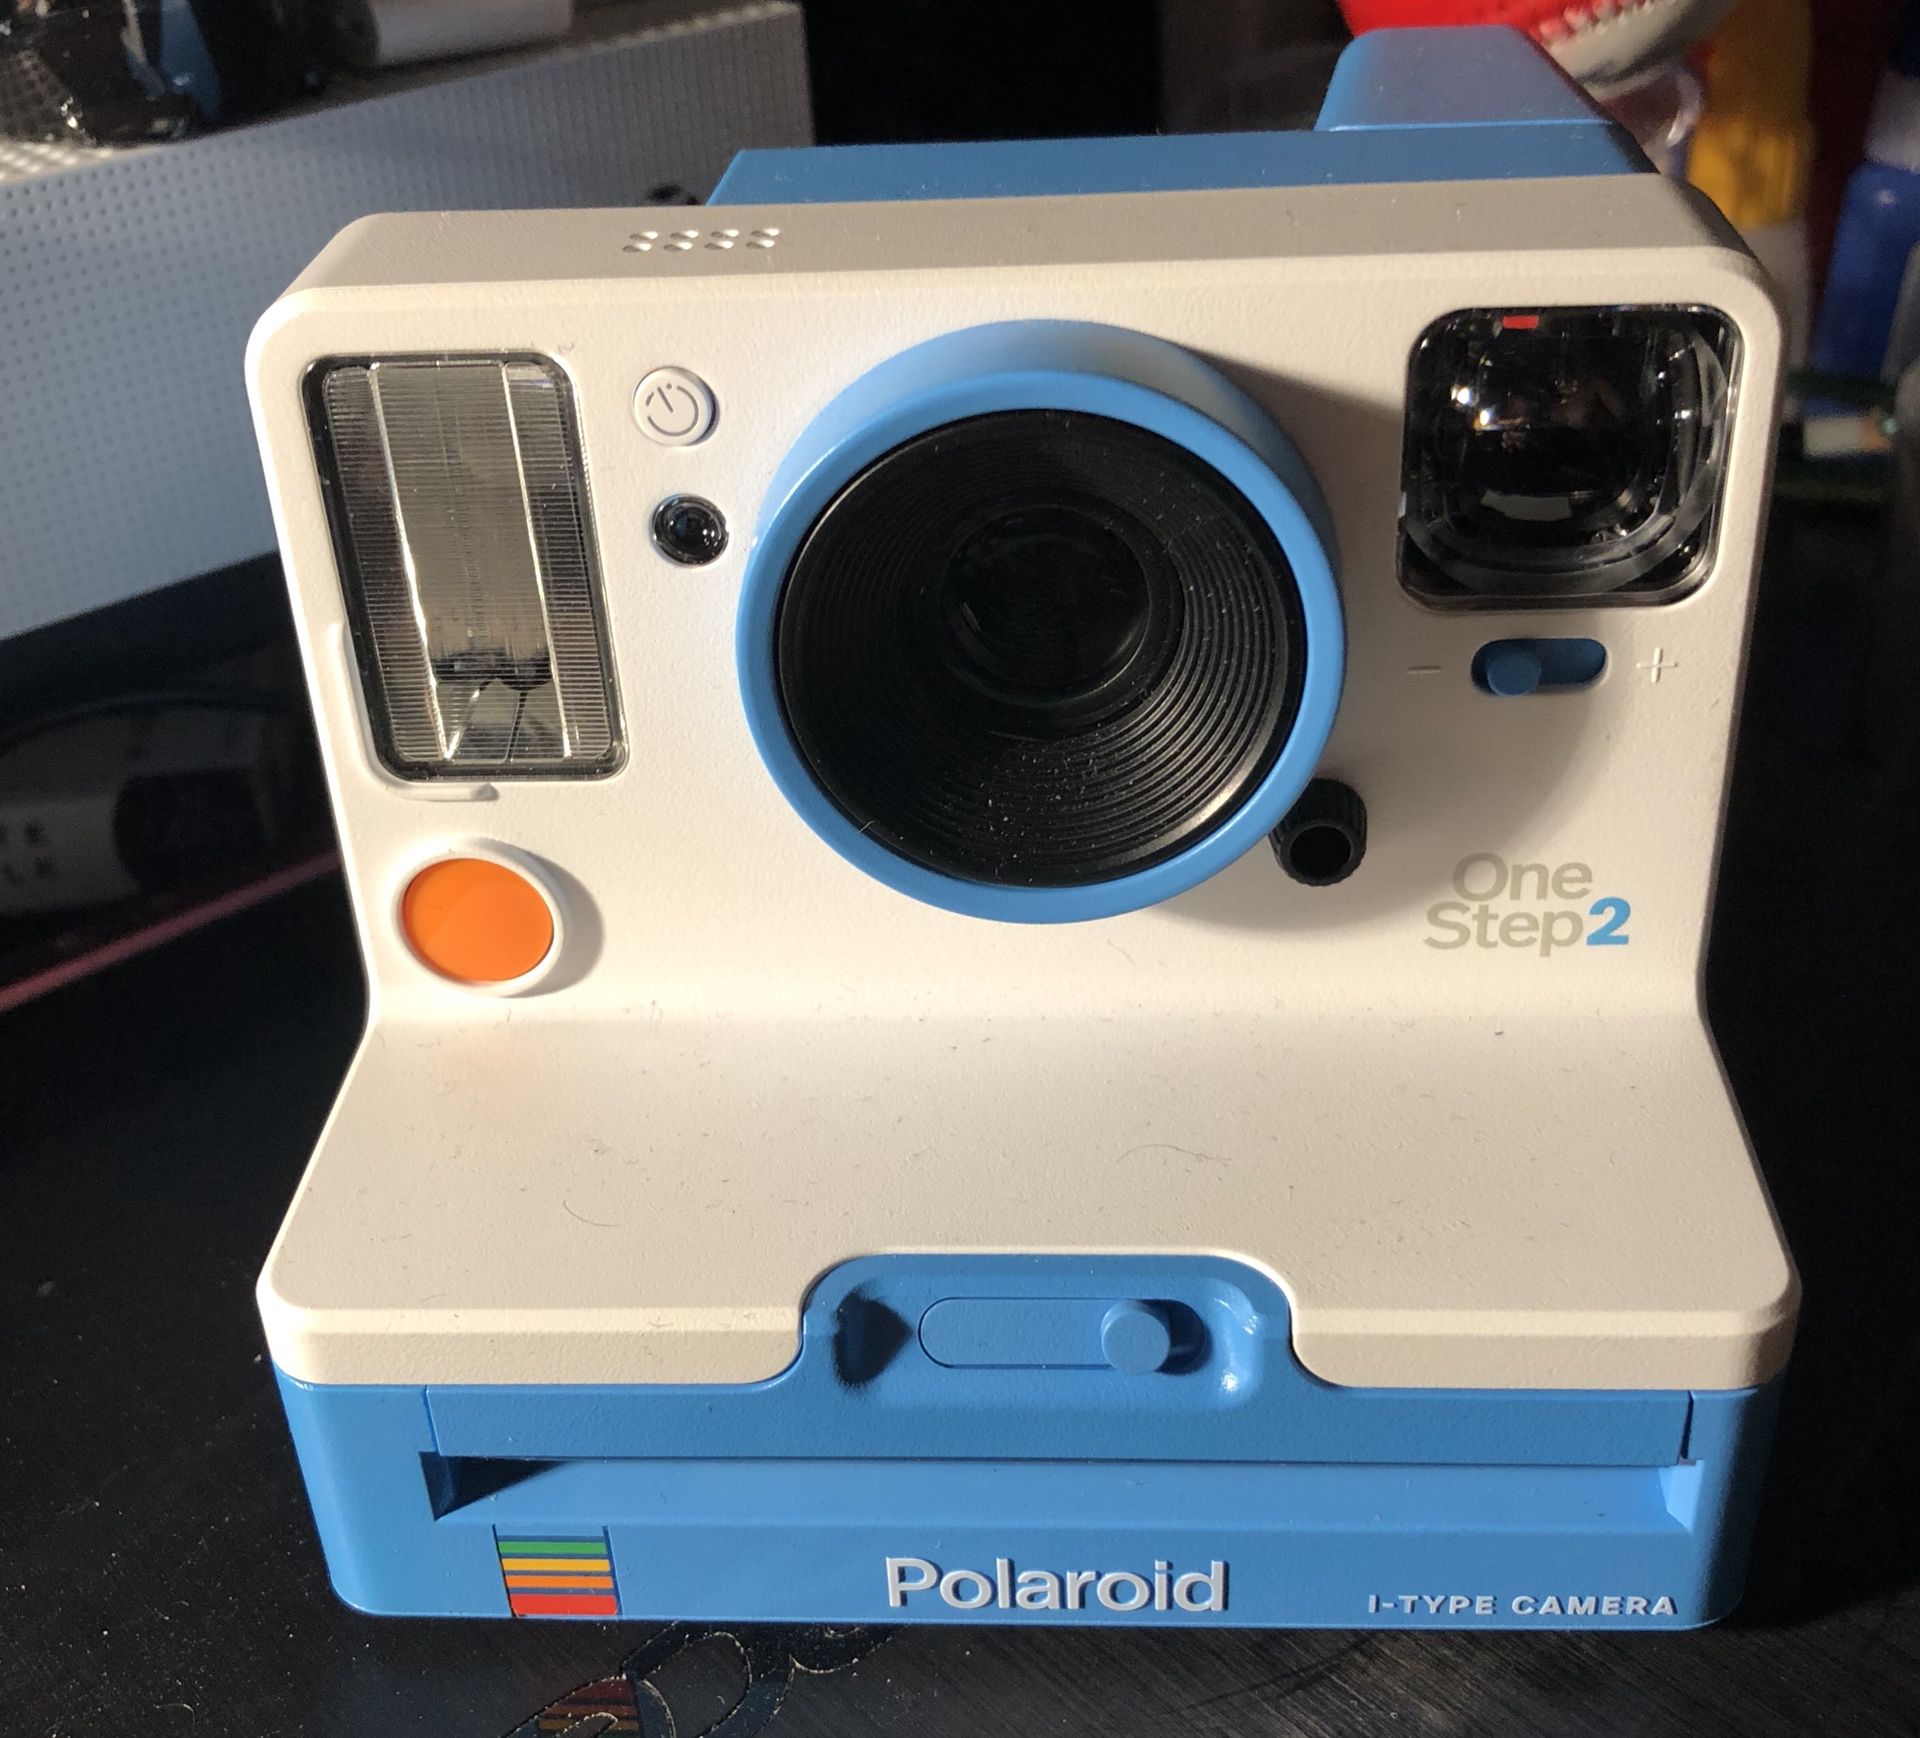 Polaroid camera with 3 extra film cartridges